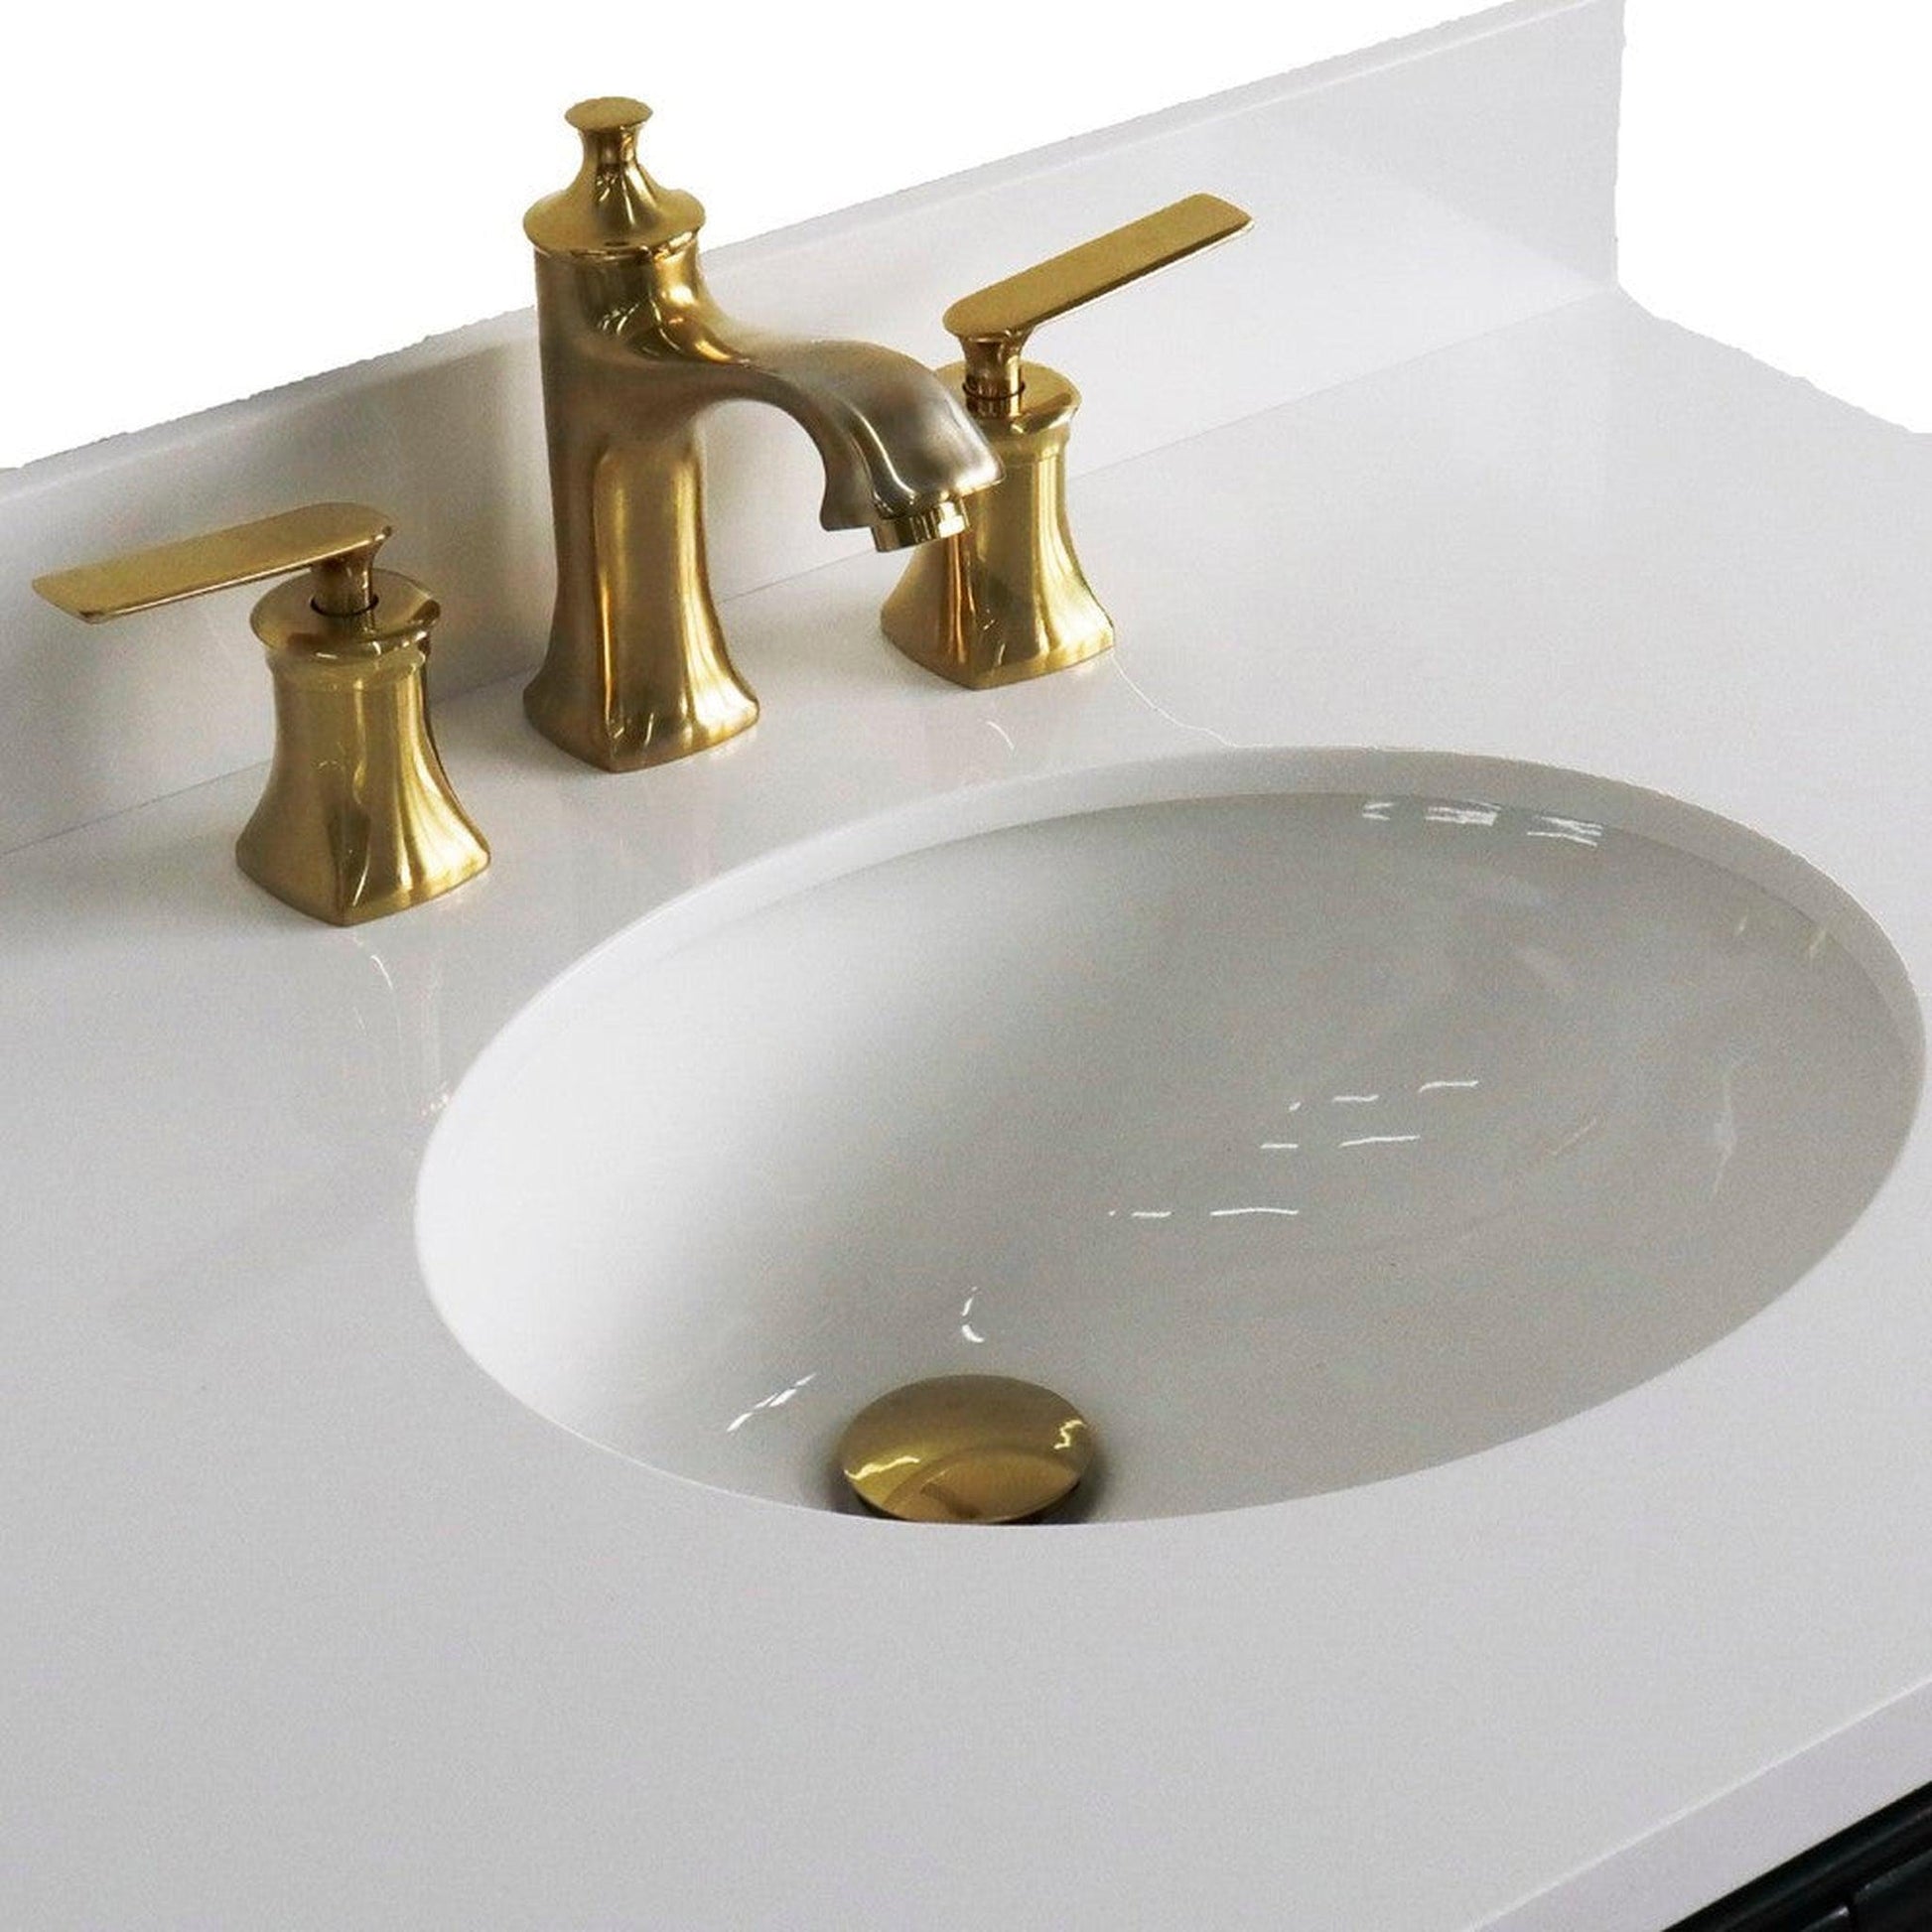 Bellaterra Home Forli 31" 2-Door 1-Drawer Dark Gray Freestanding Vanity Set With Ceramic Undermount Oval Sink And White Quartz Top